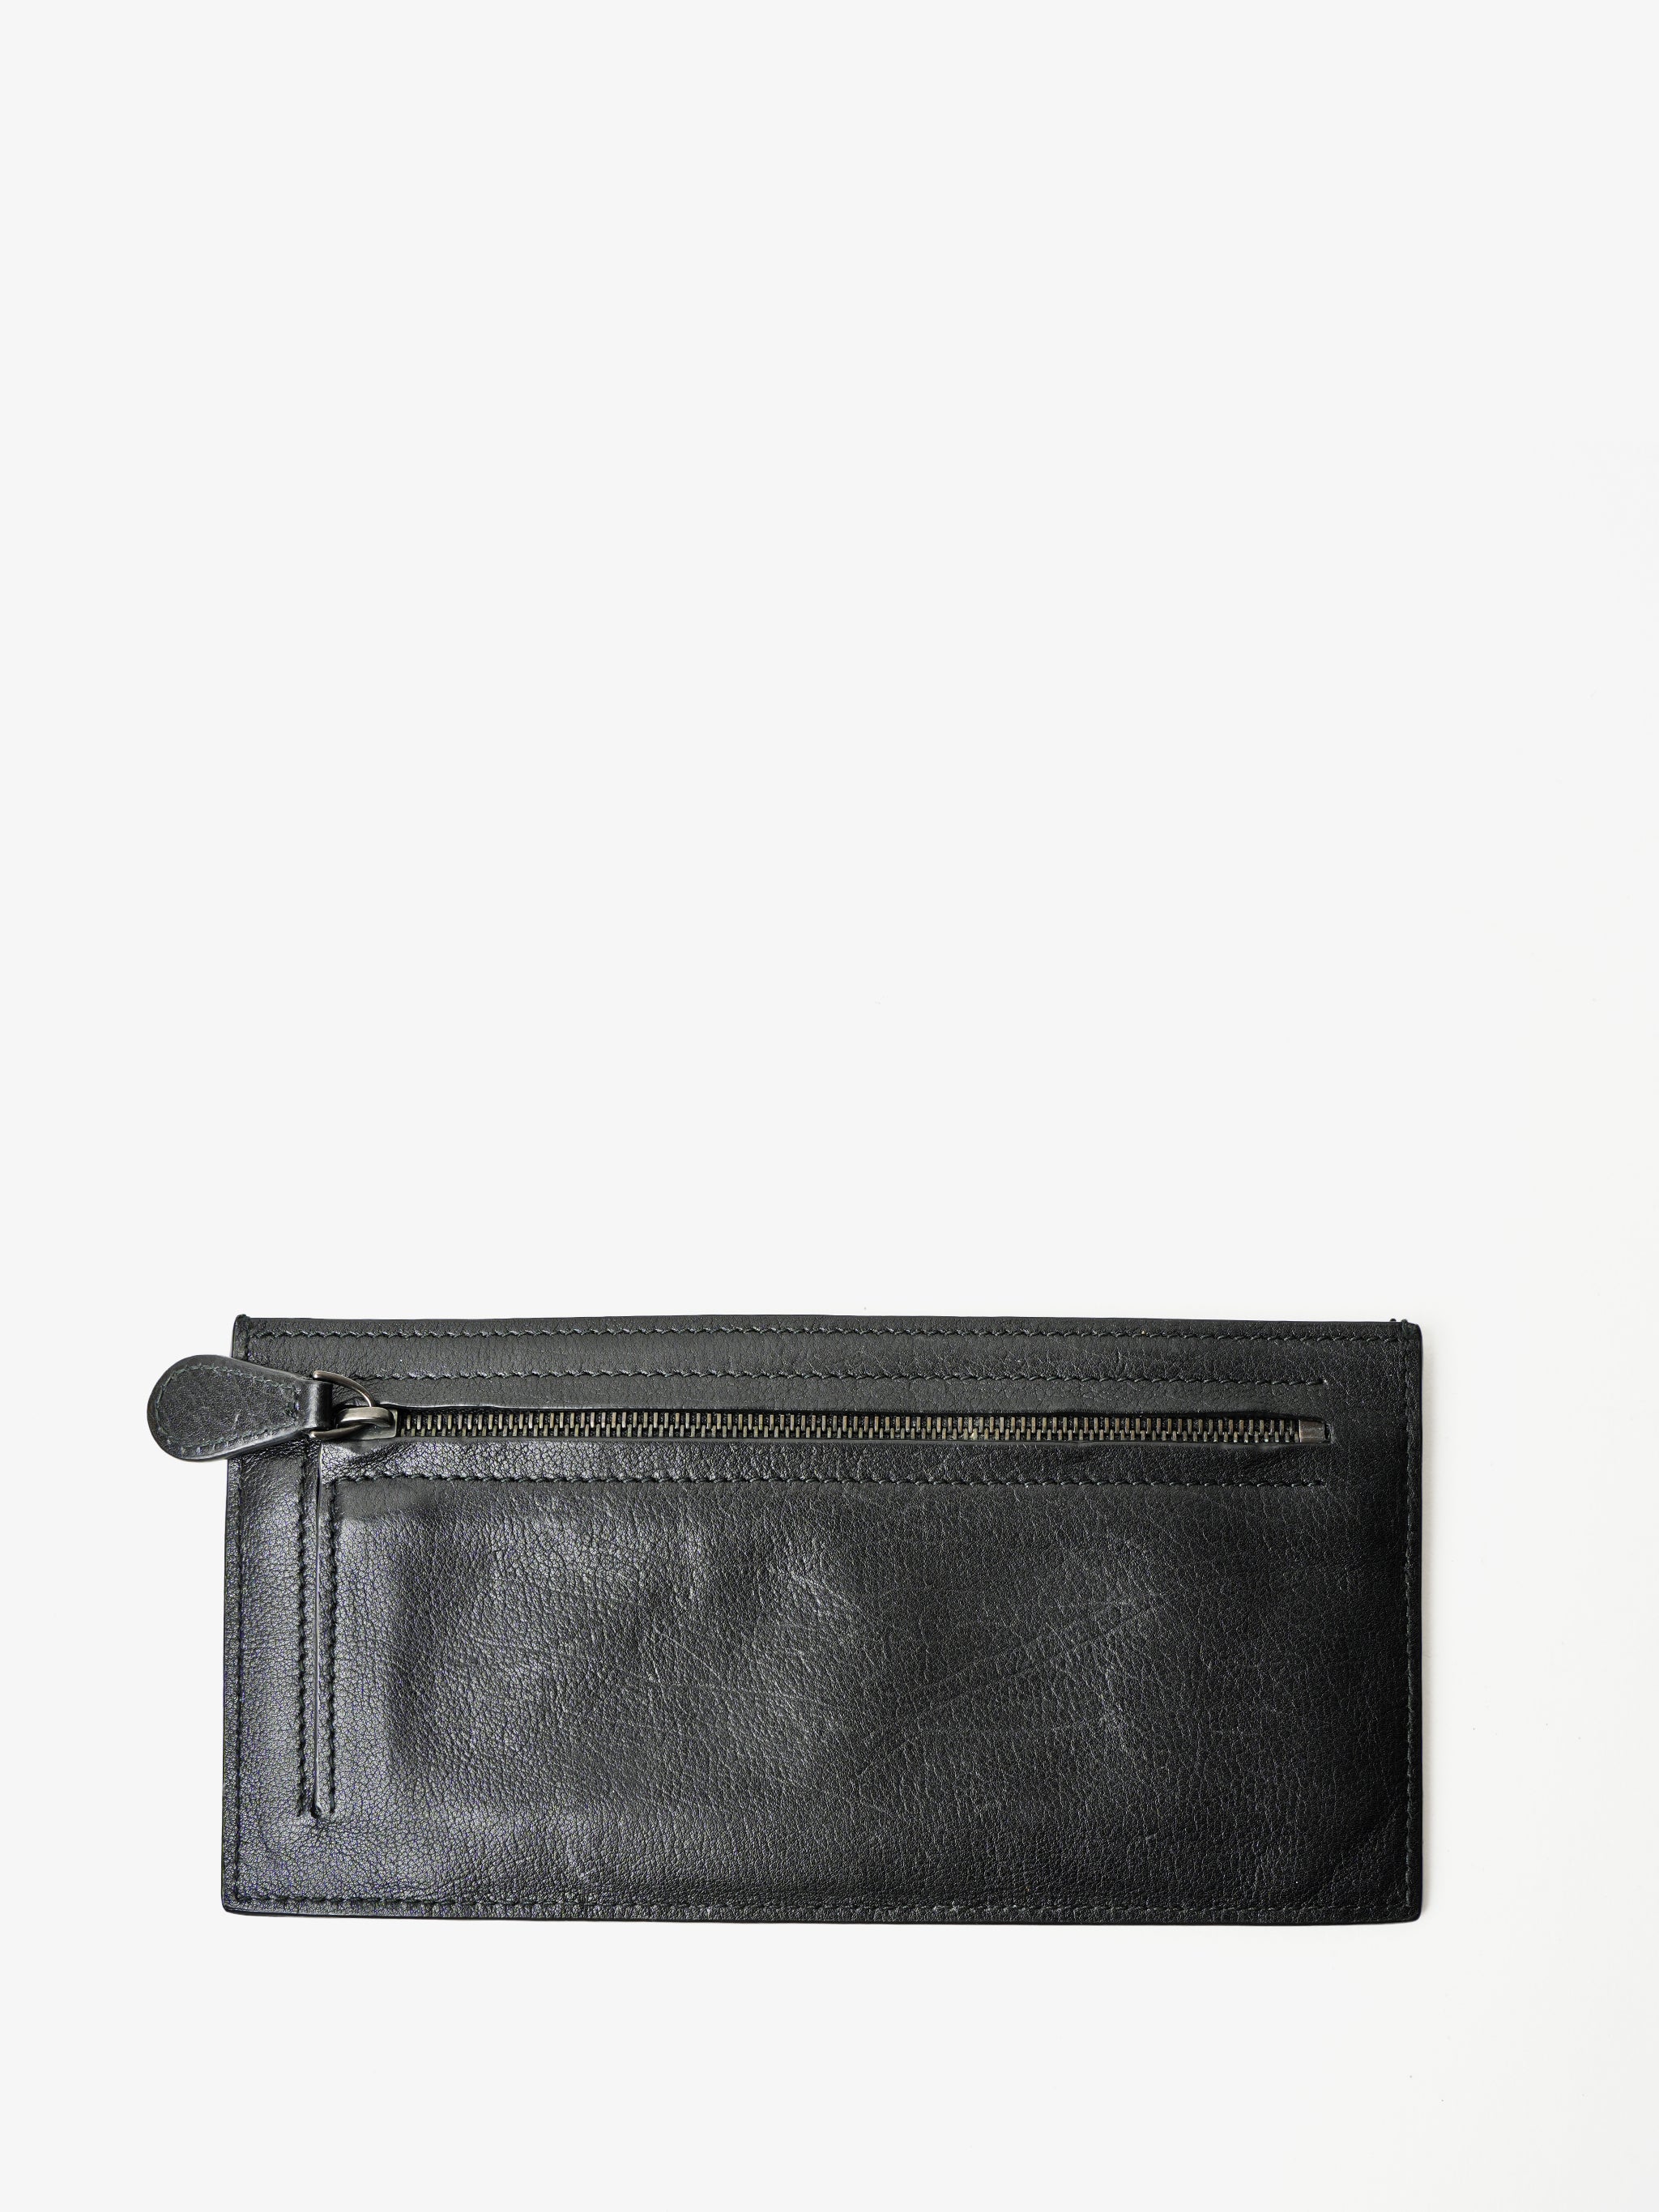 Bottega Veneta Intrecciato Leather Buisness Card Case